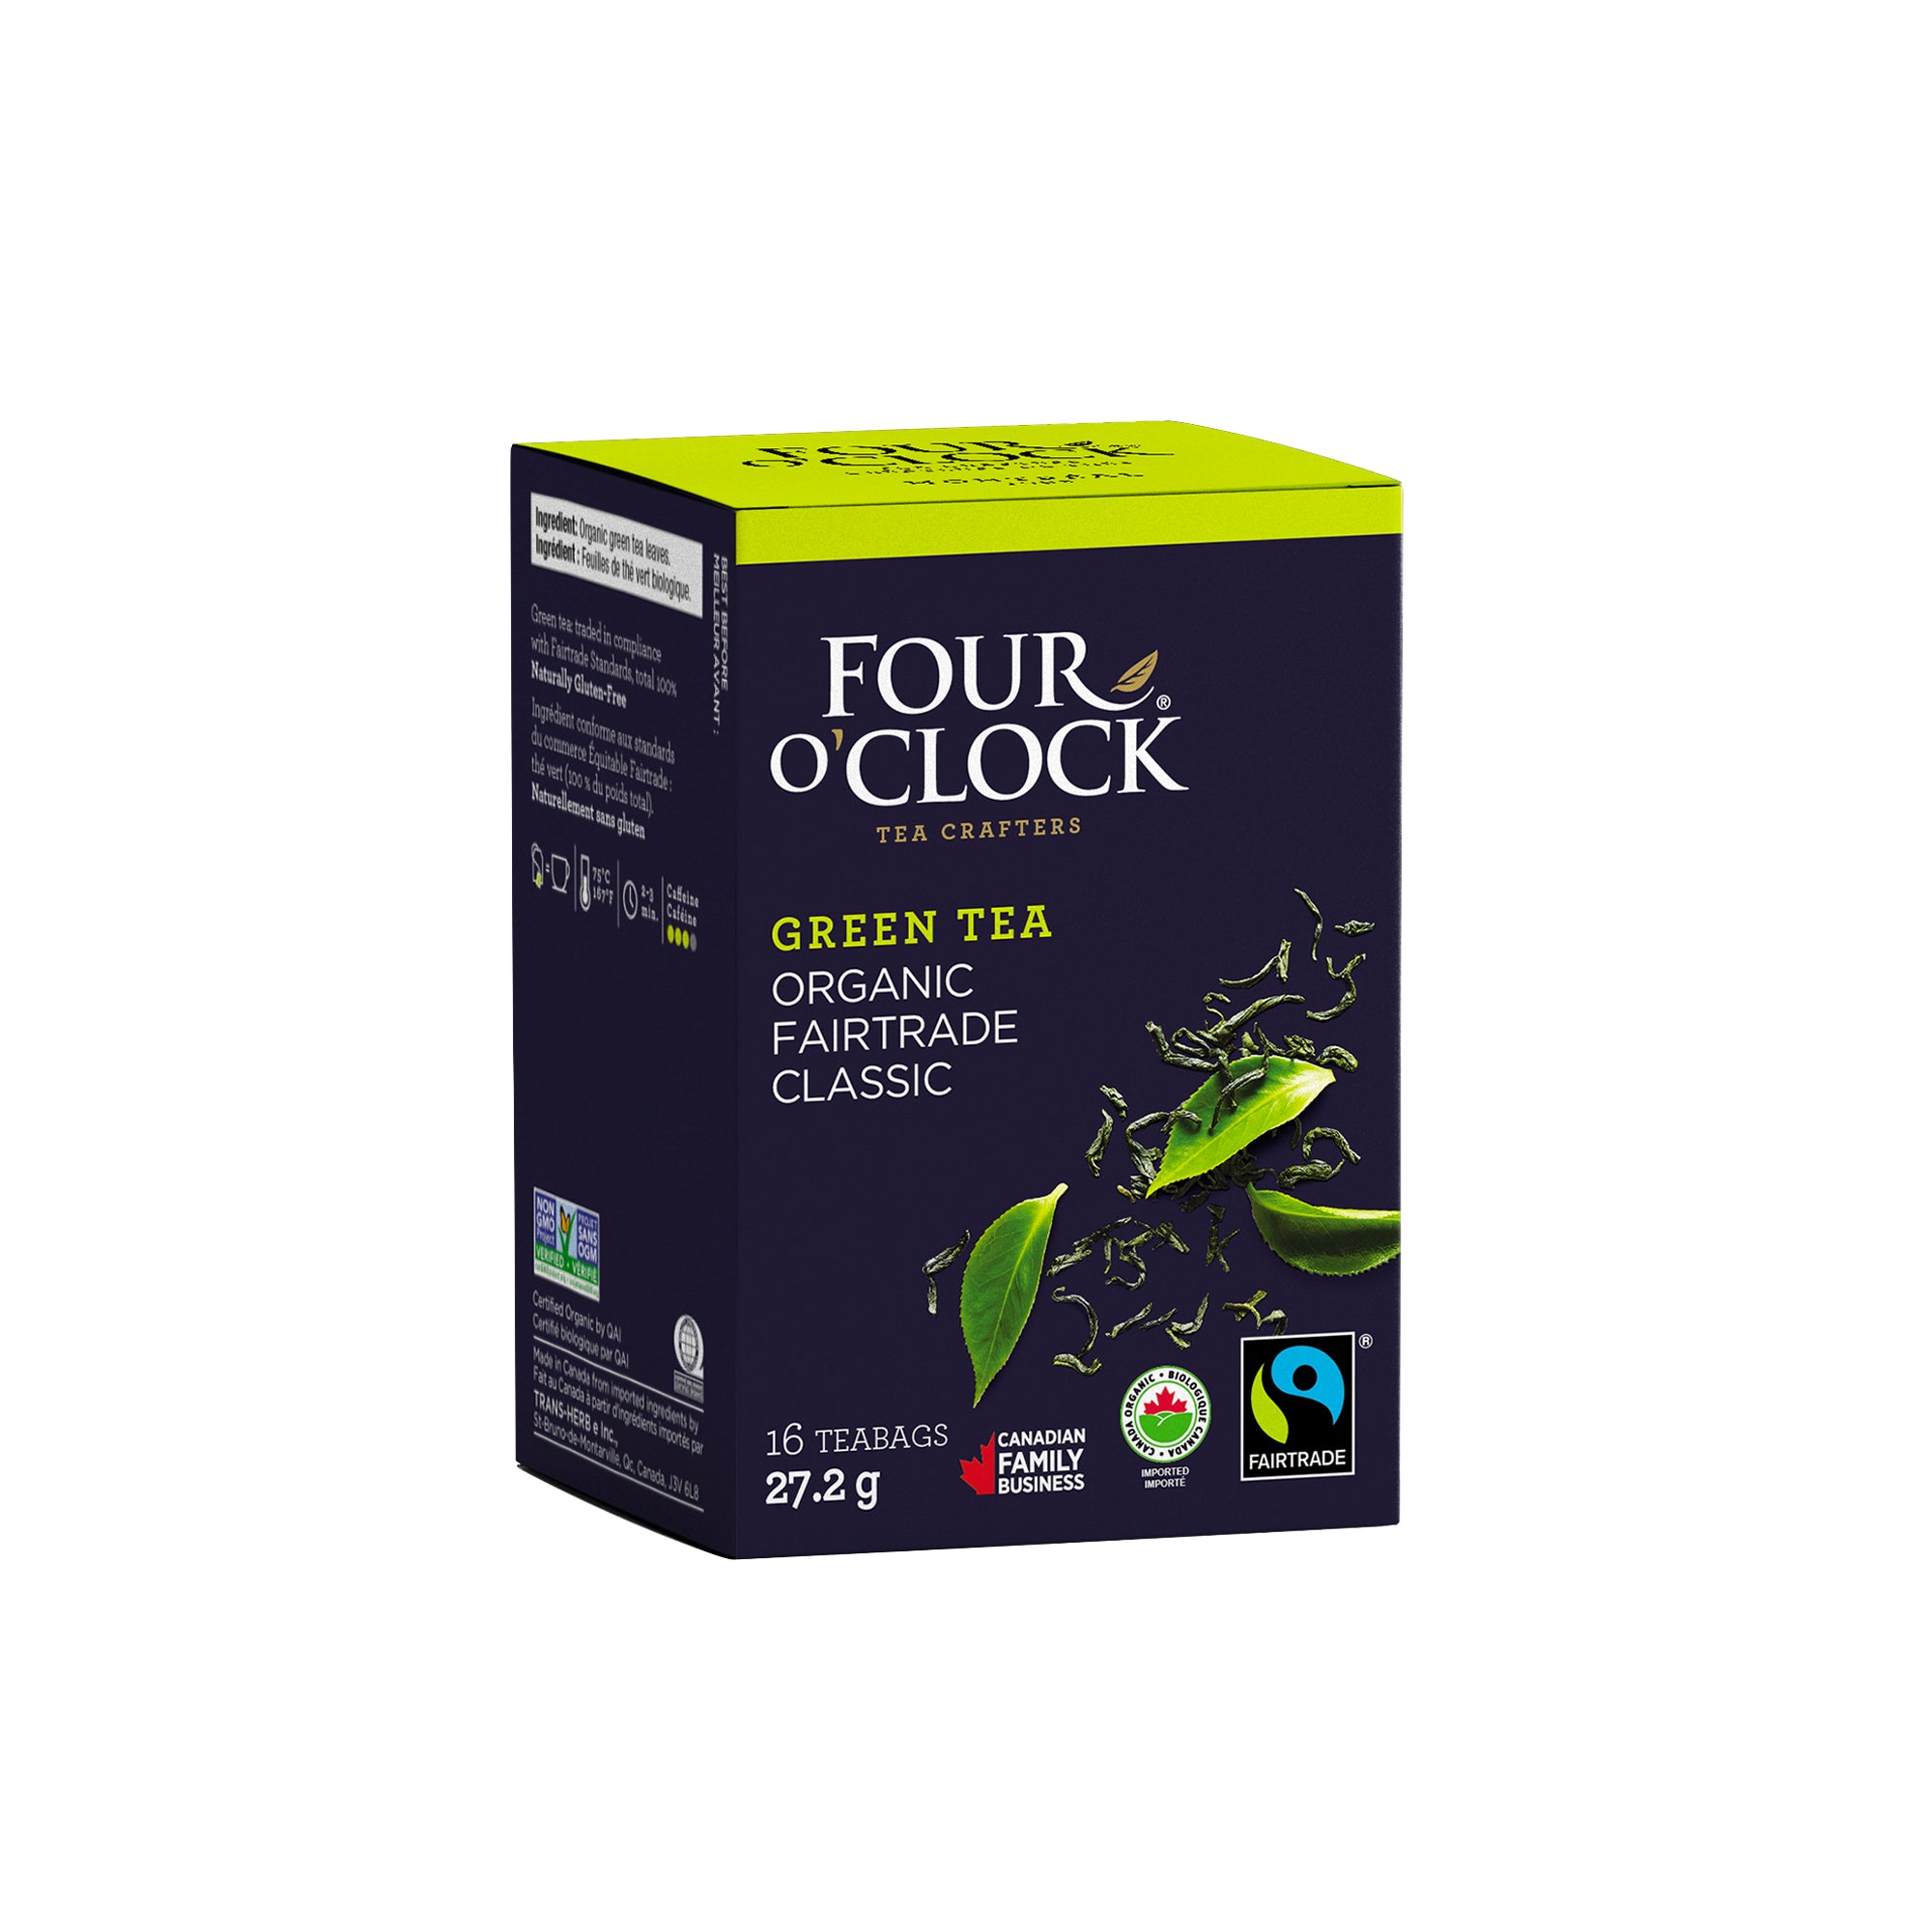 Classic Organic Fairtrade Green Tea